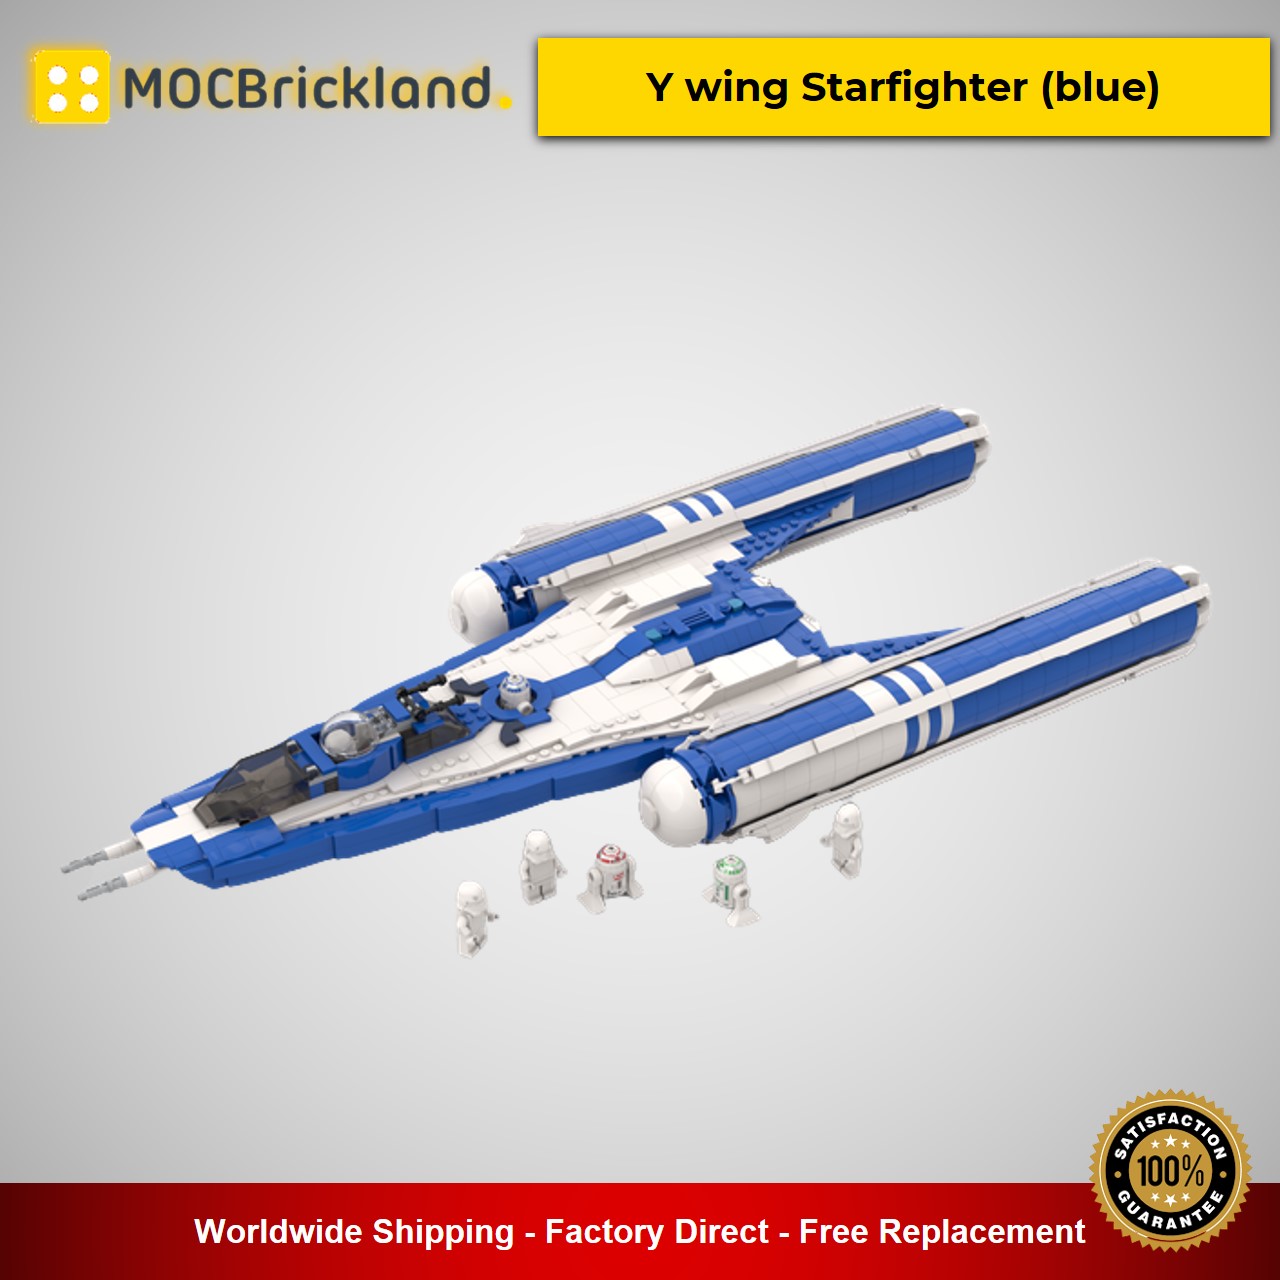 MOCBRICKLAND MOC-55736 Y Wing Starfighter (Blue)